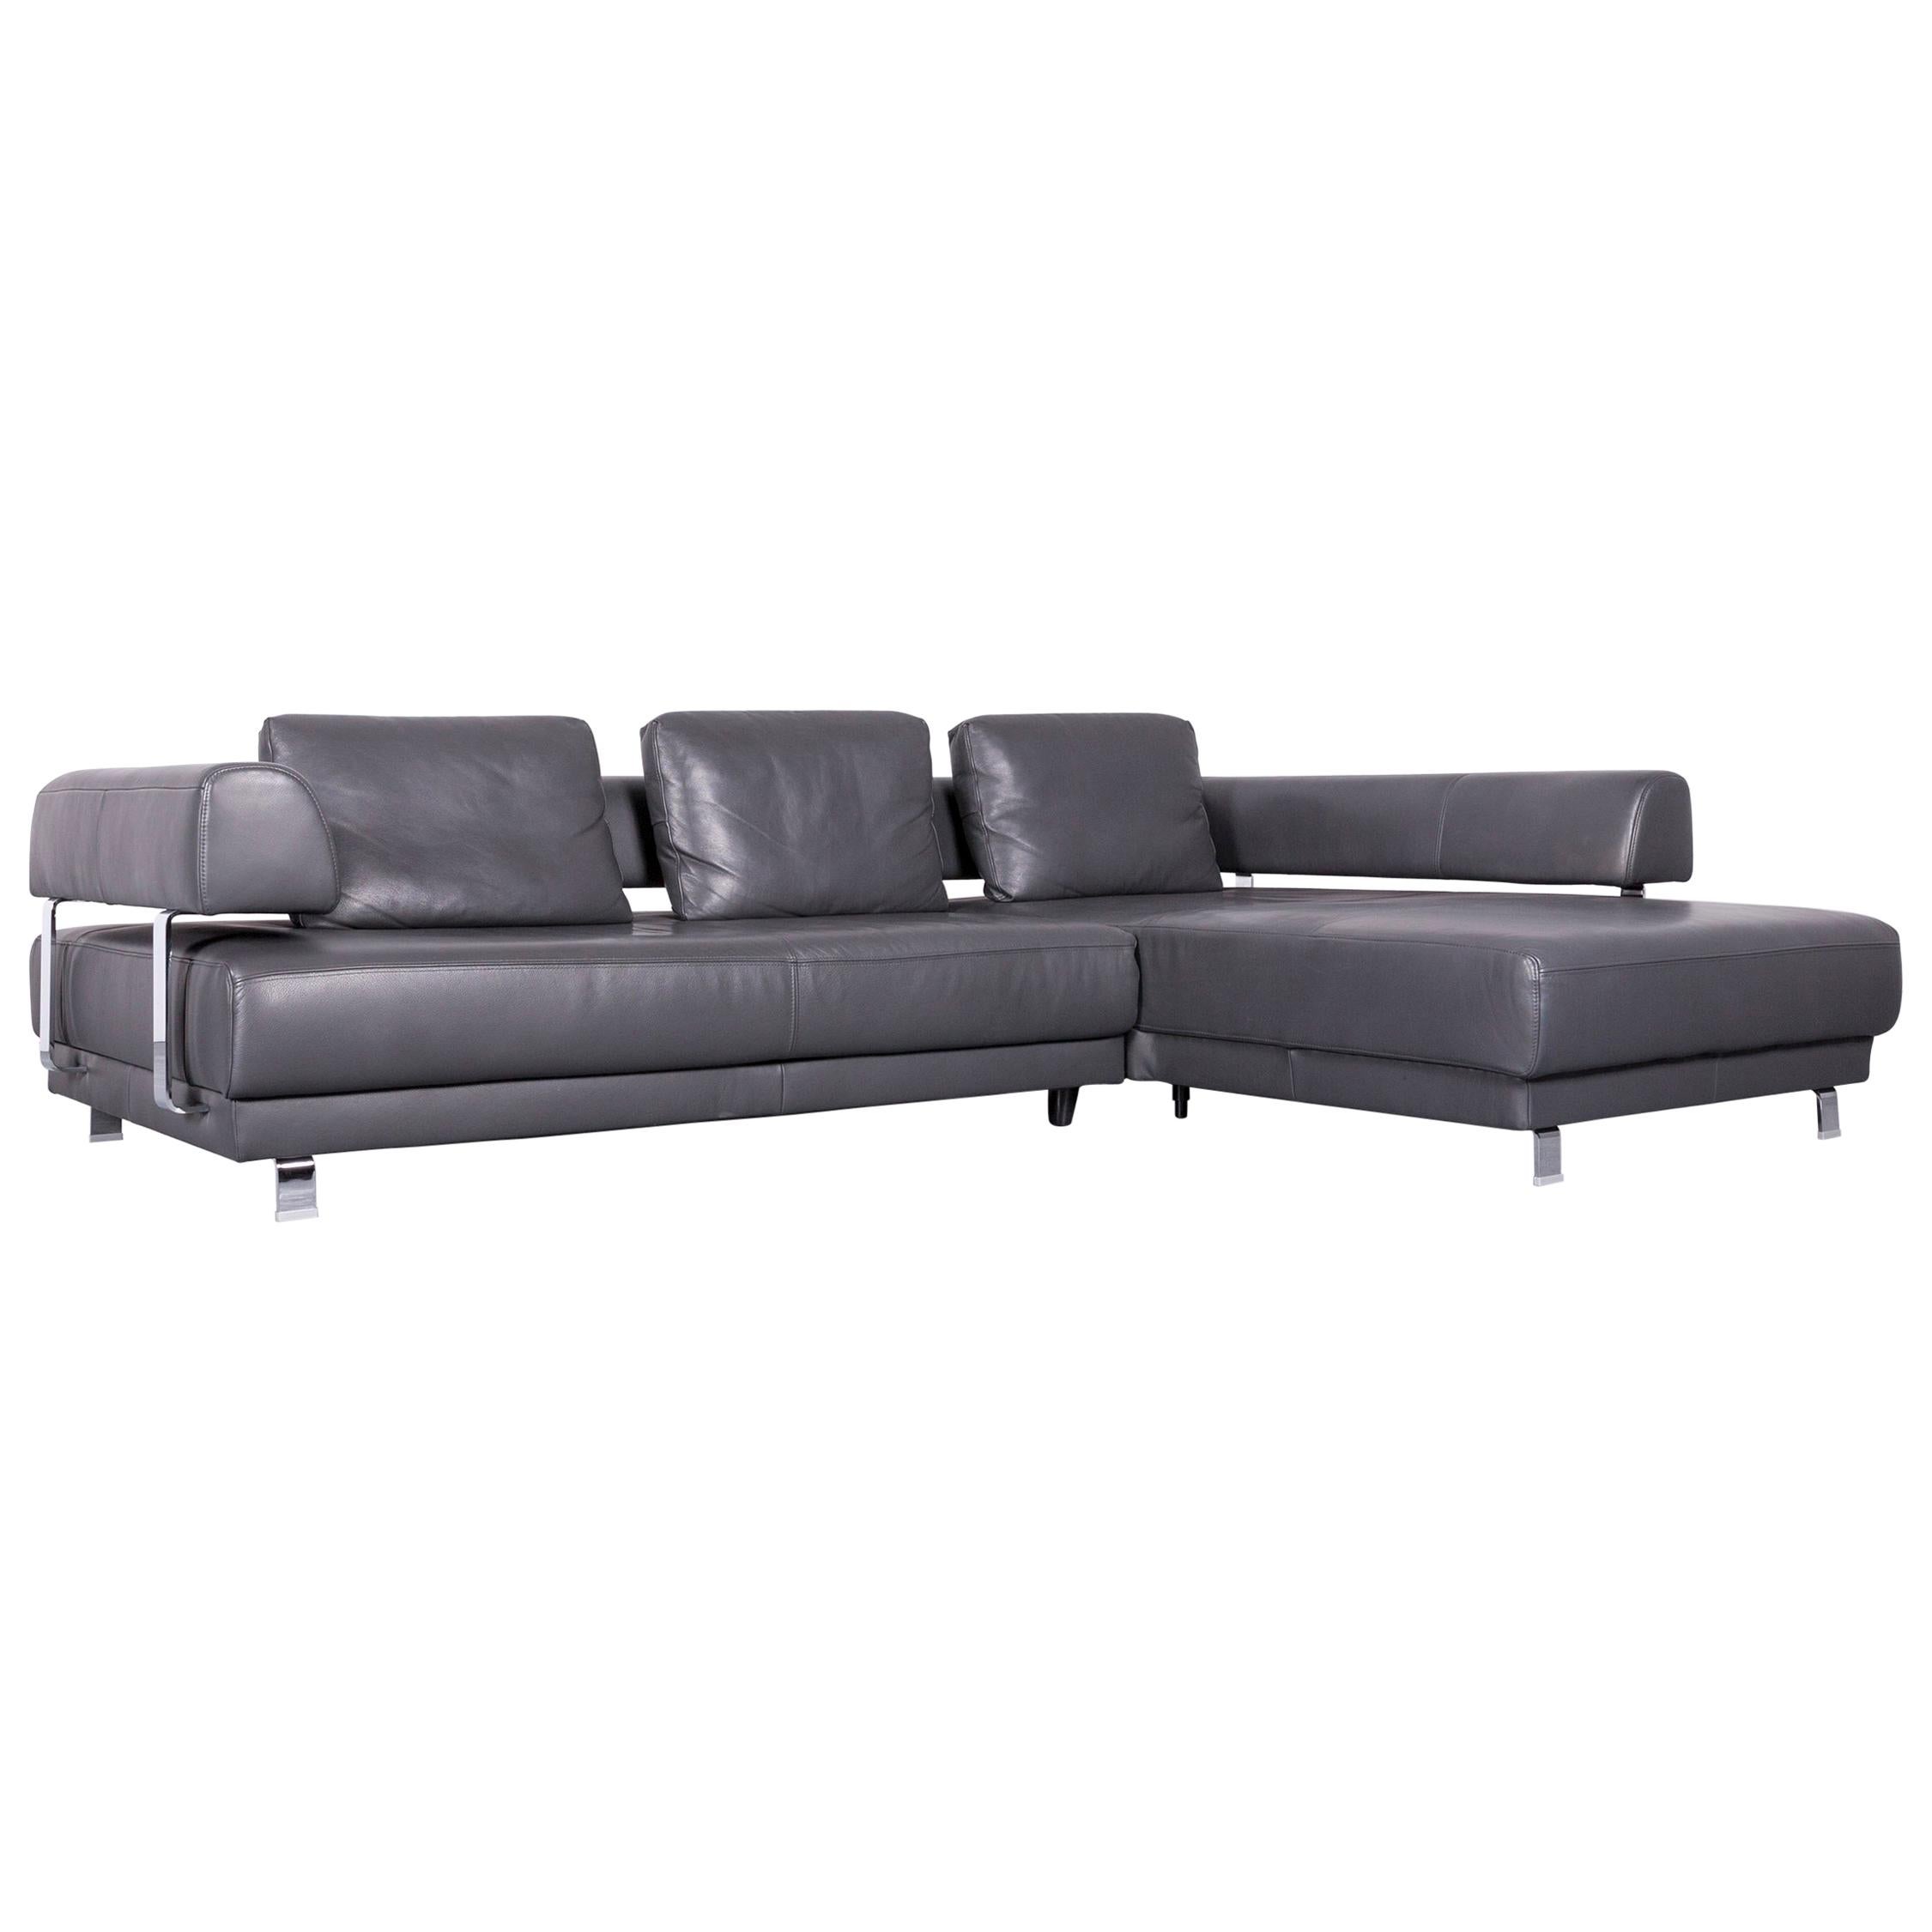 Ewald Schillig Brand Face Designer Sofa Leather Grey Corner Couch